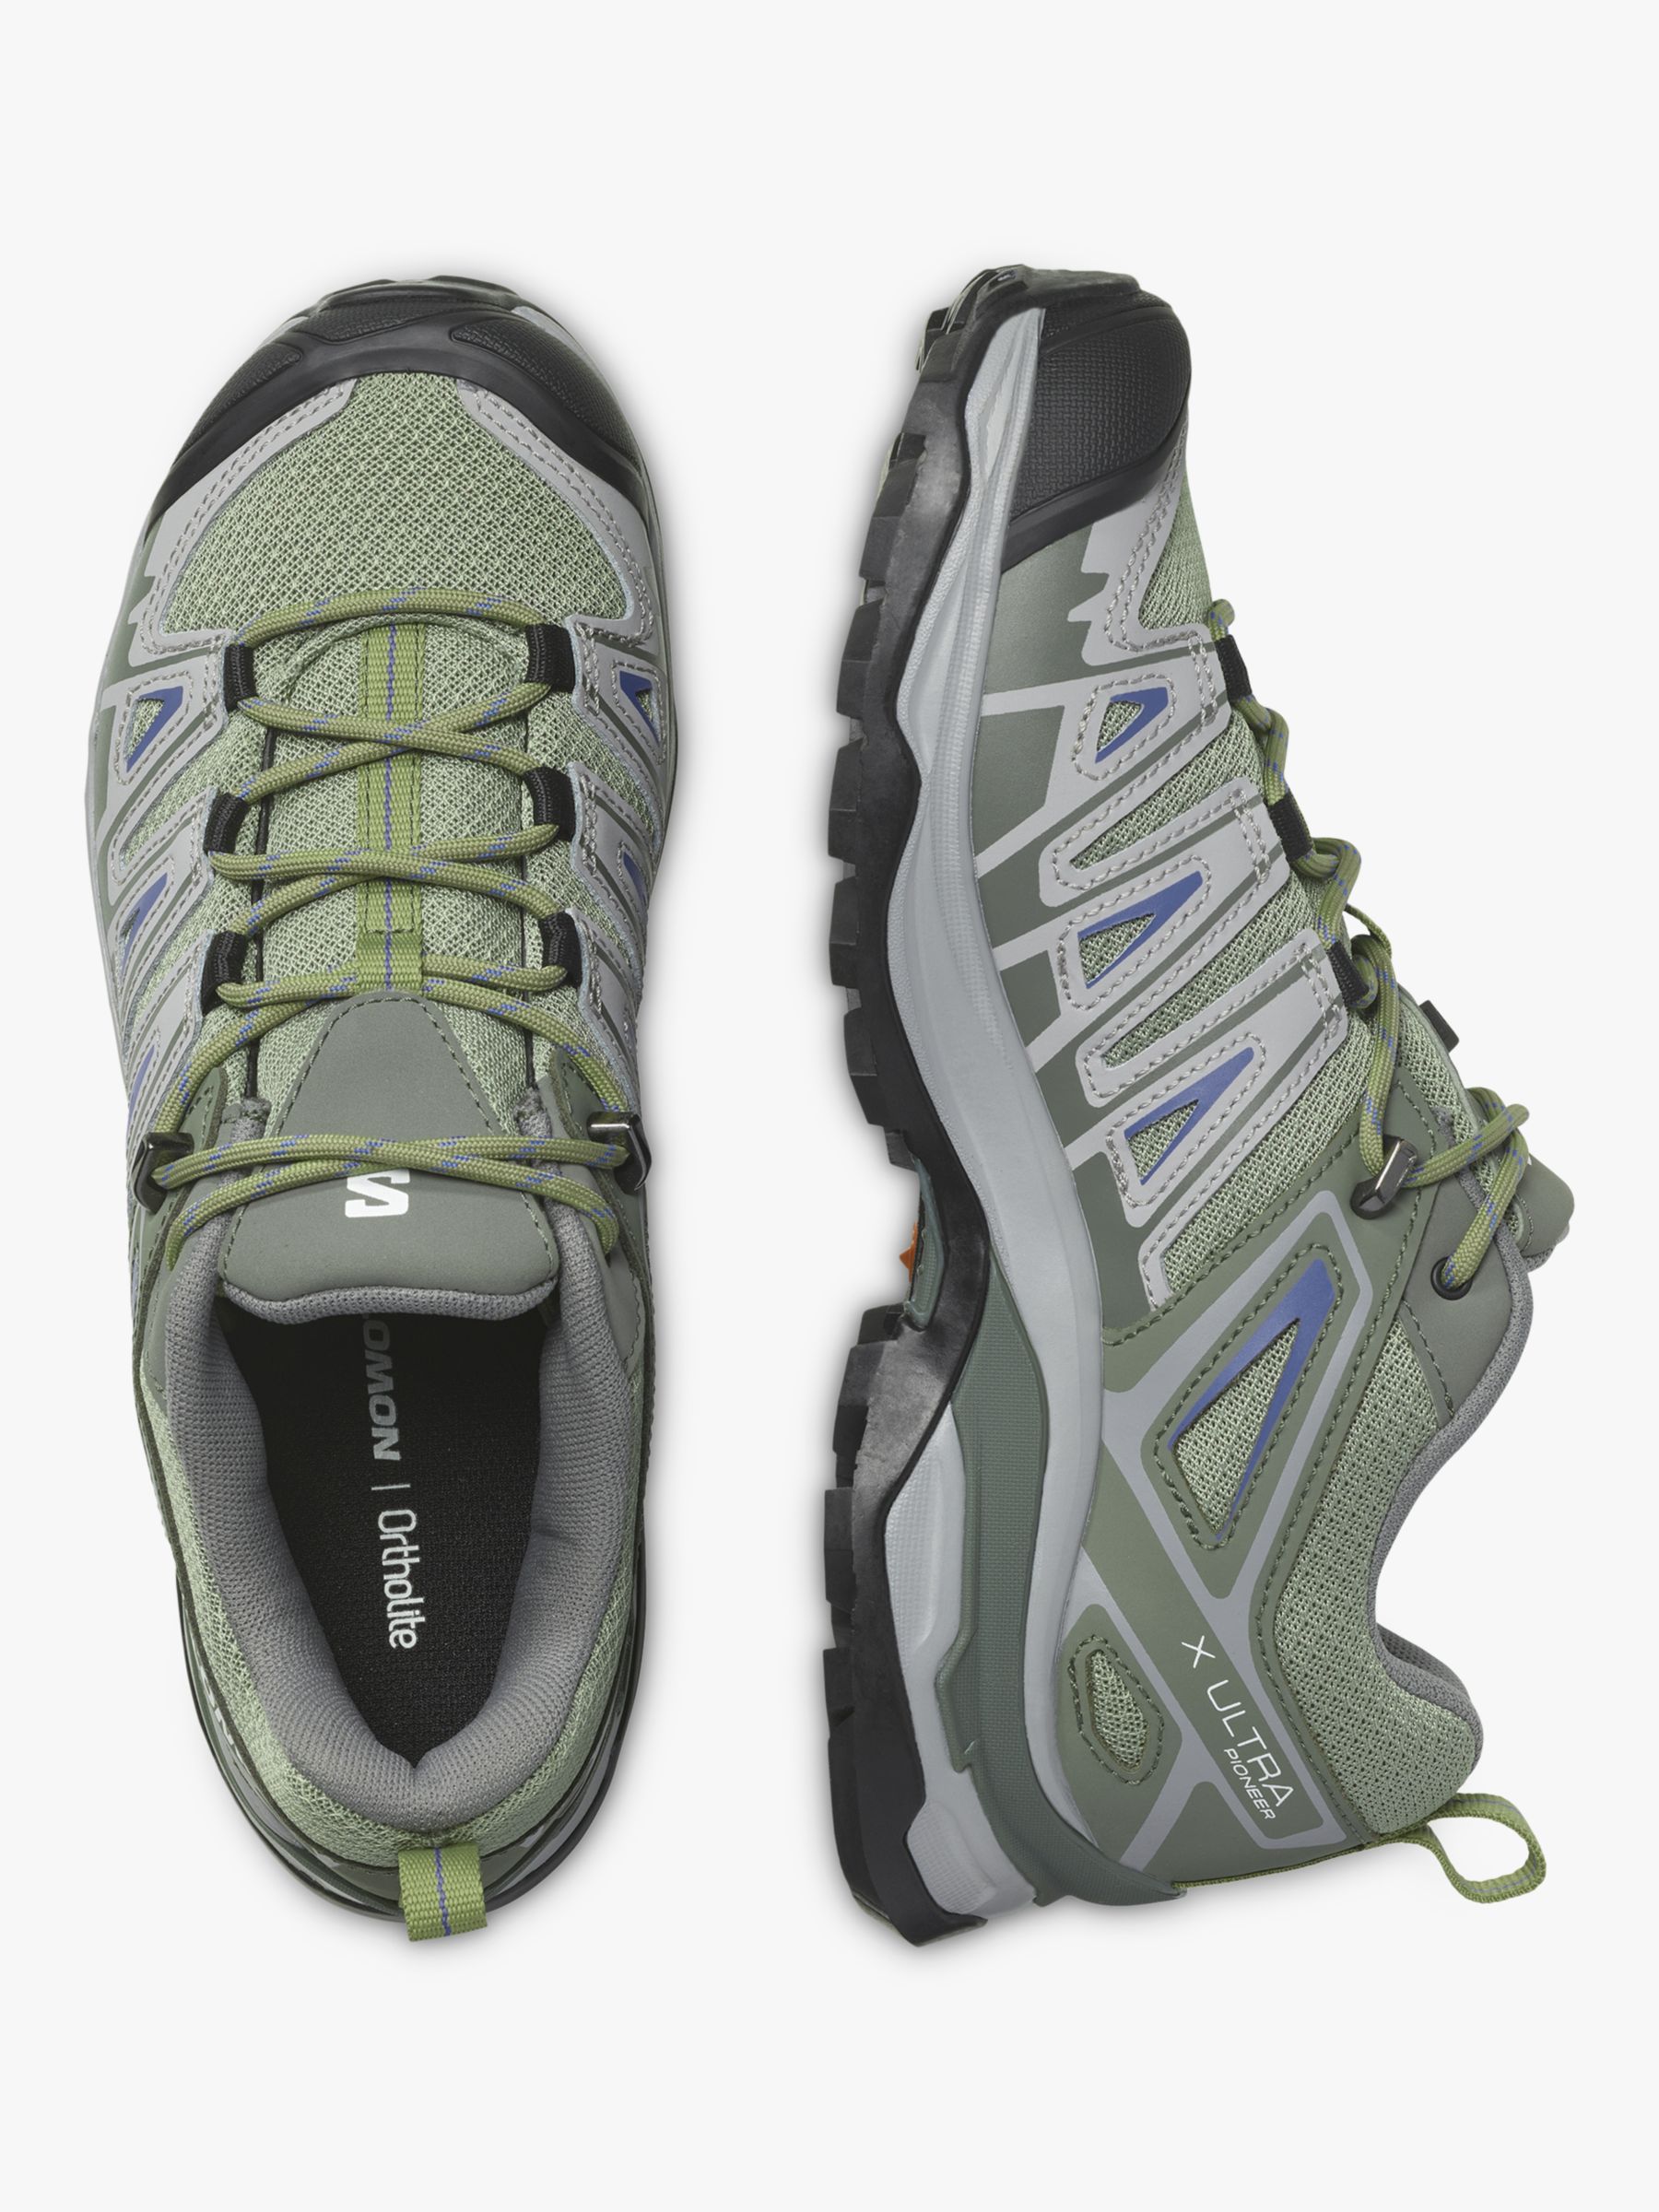 Salomon Ultra Pioneer Aero Women's Waterproof Hiking Shoes, Green/Gray/Blue at John Lewis & Partners